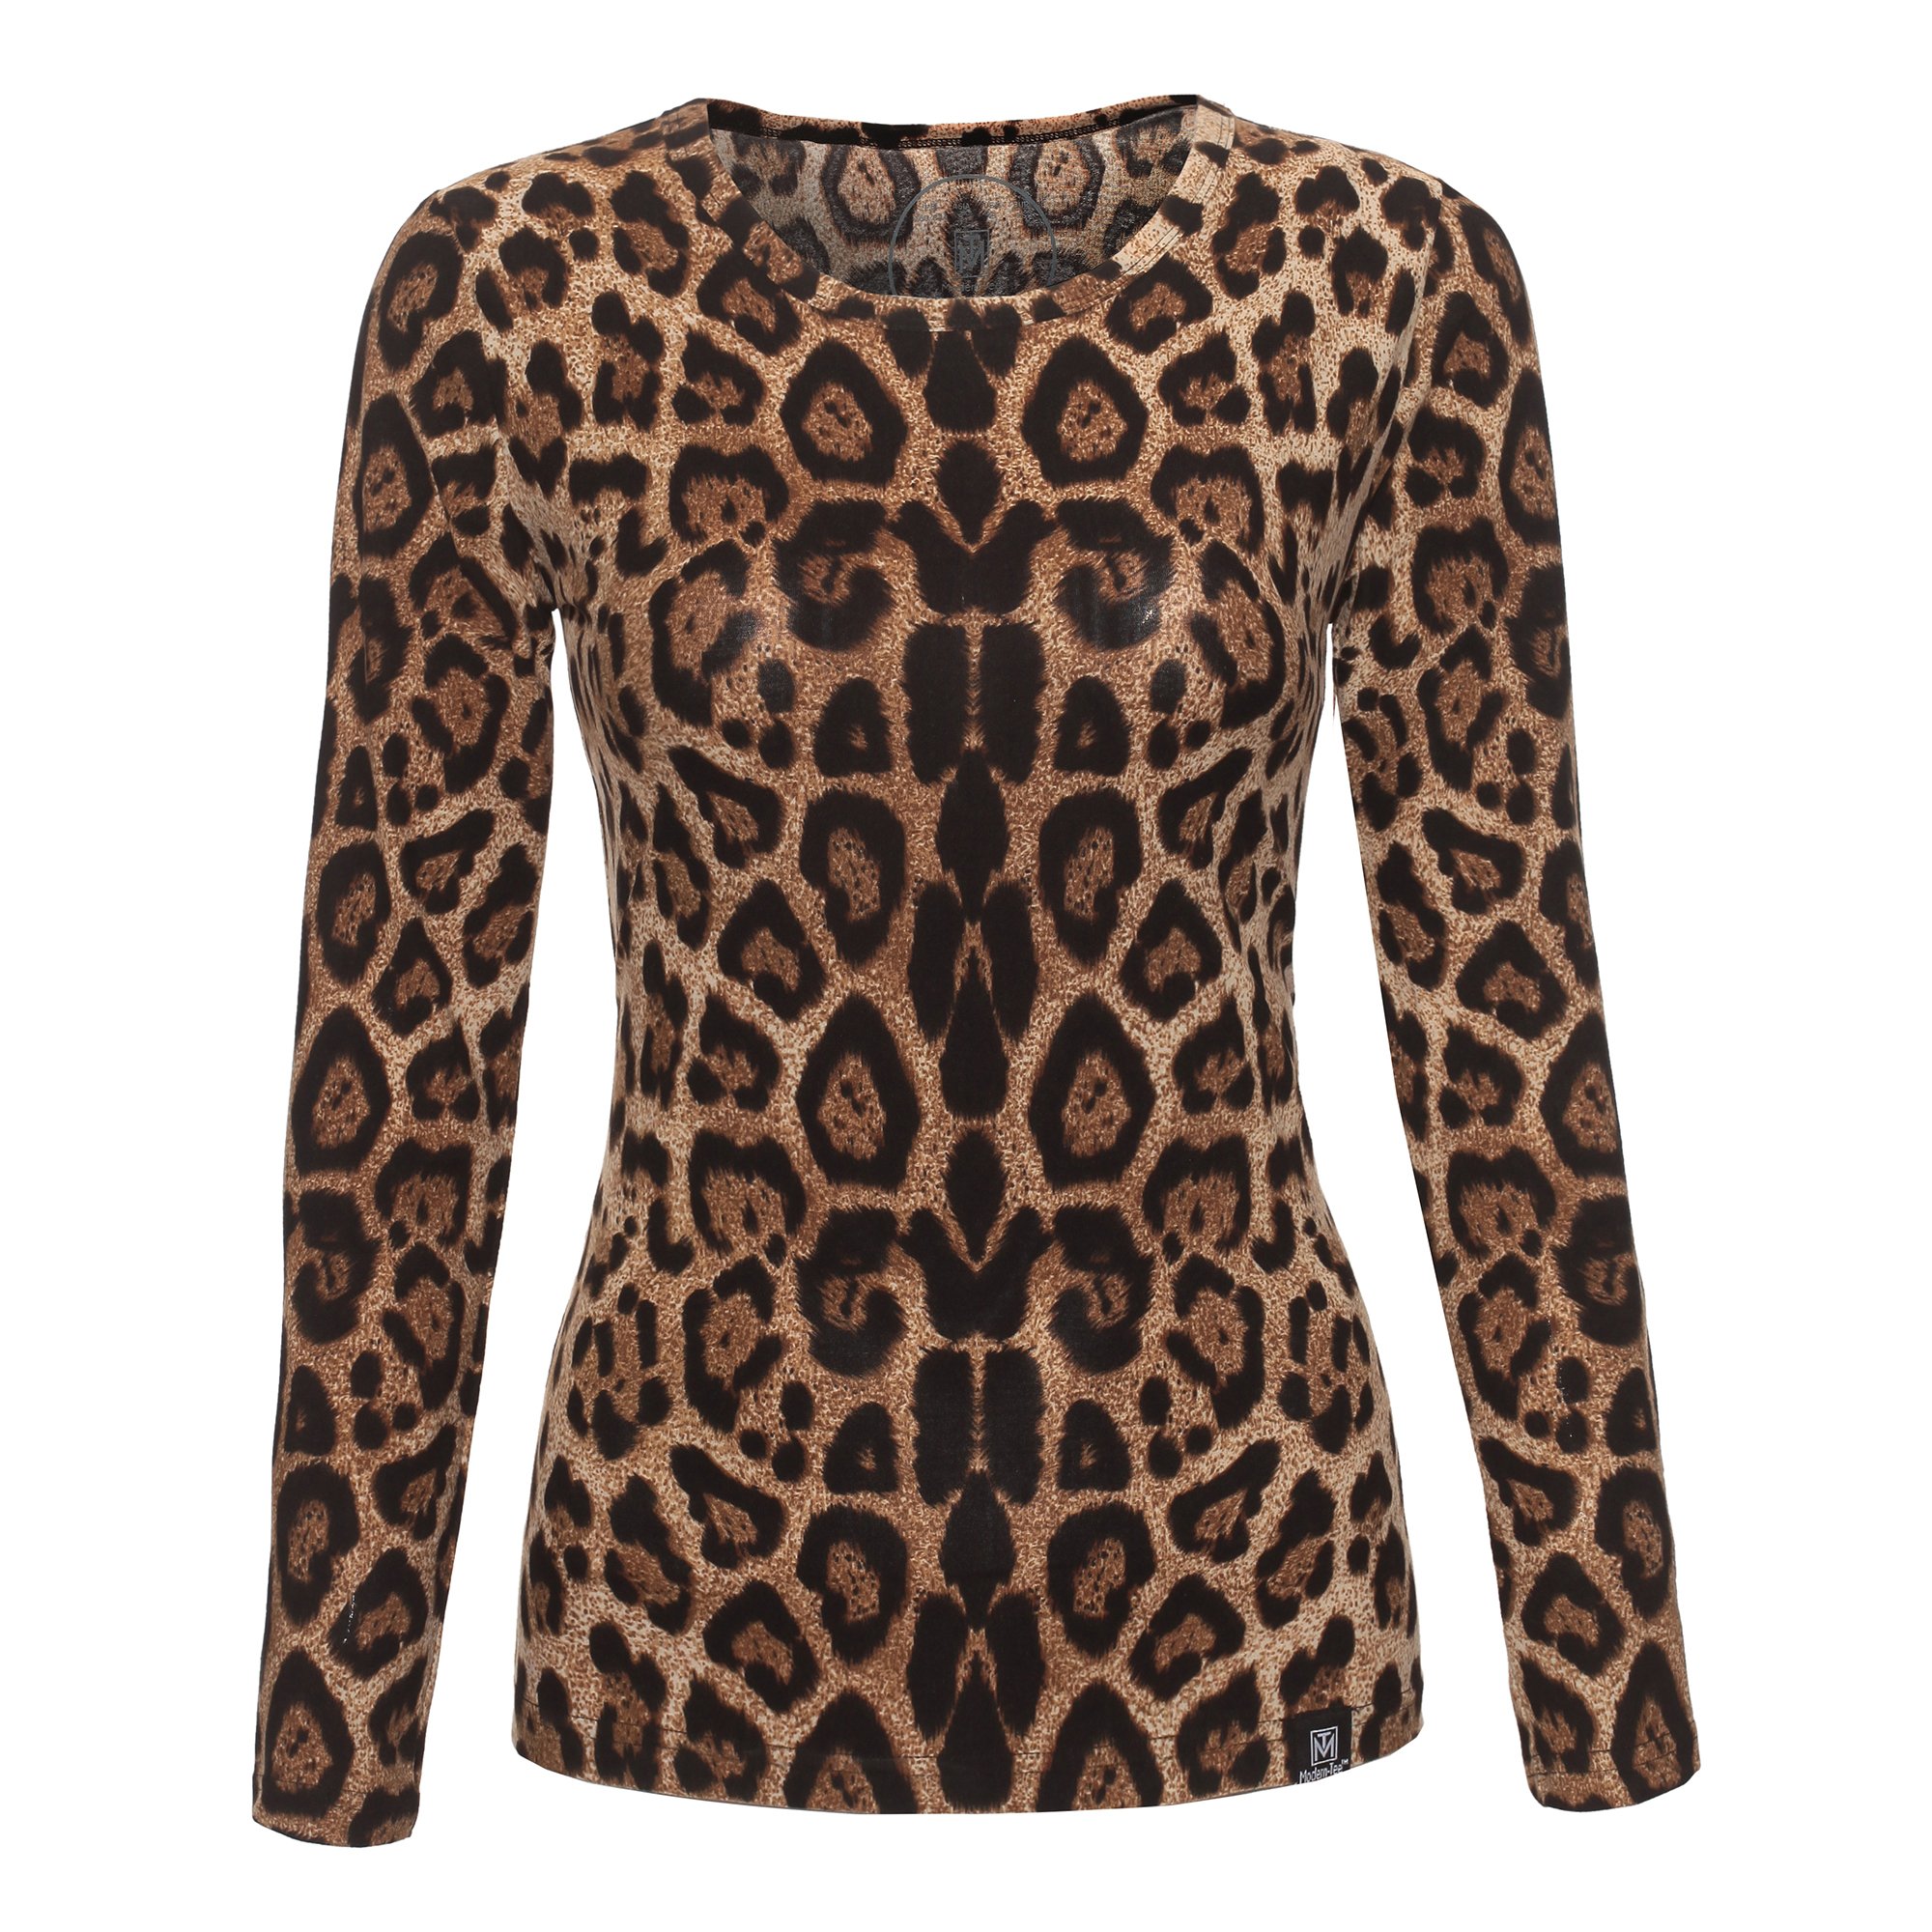 Modern-Tee Women's Round Crew Neck Leopard Printed Fashion T-Shirt Long Sleeve Tops